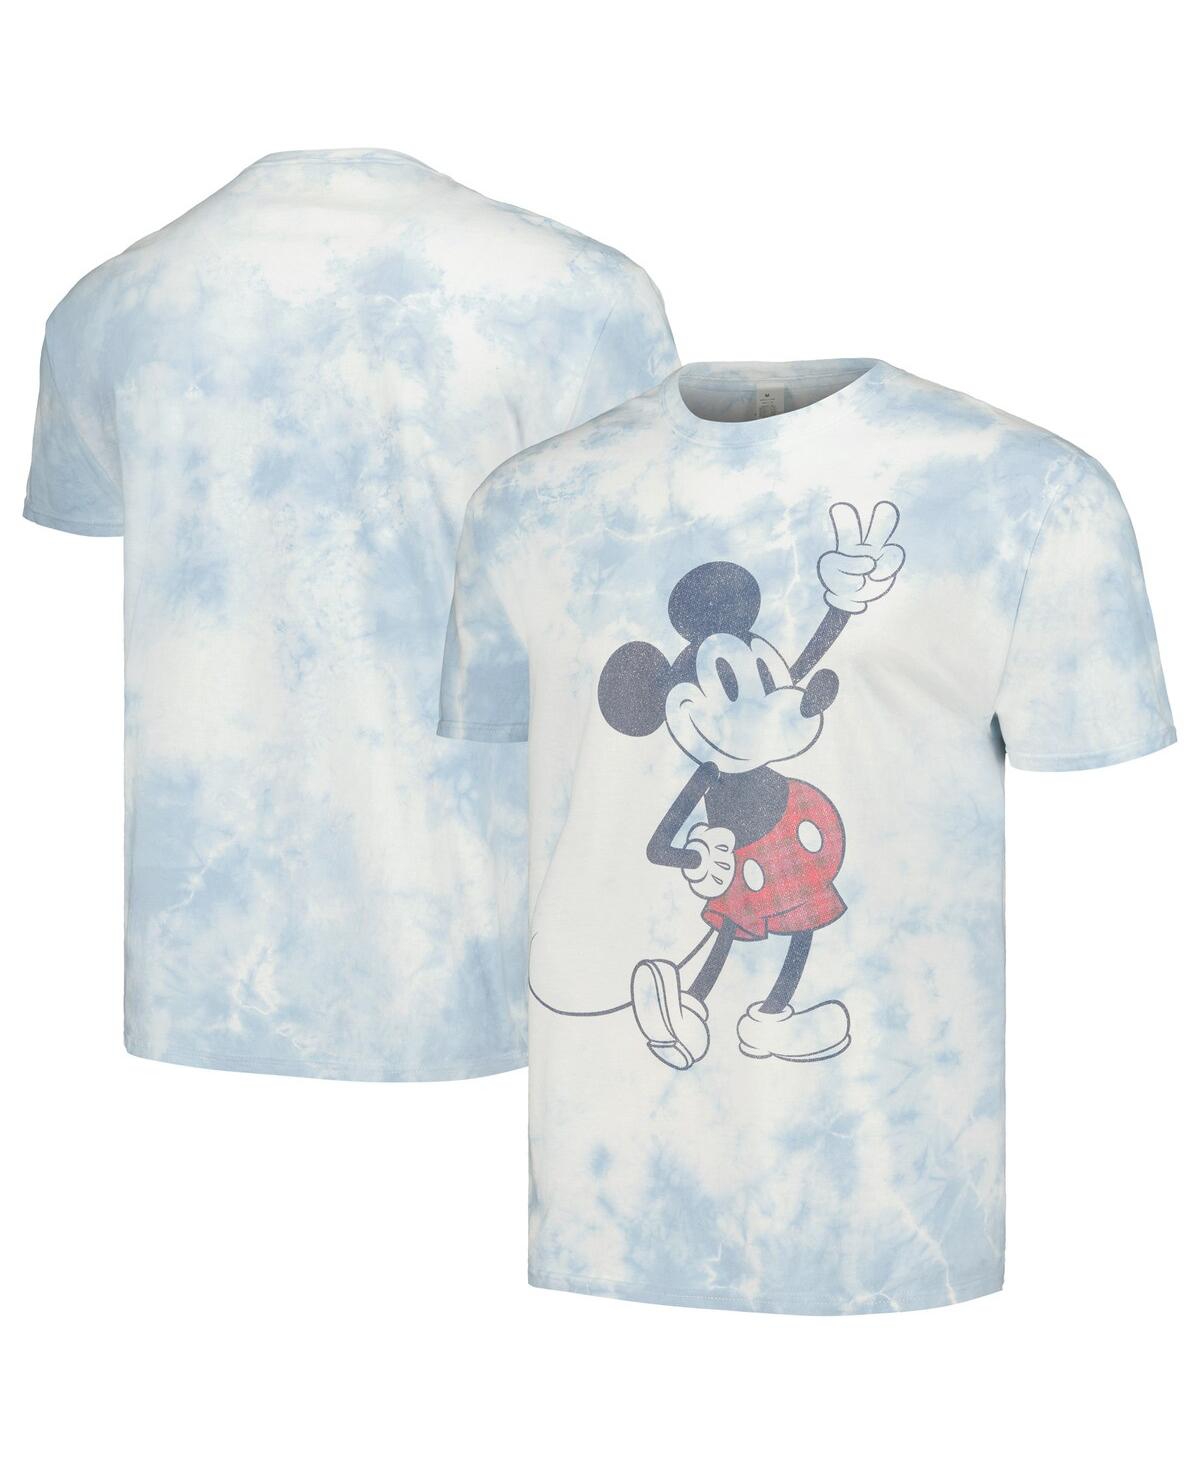 Men's and Women's White Mickey & Friends Plaid Graphic T-shirt - White